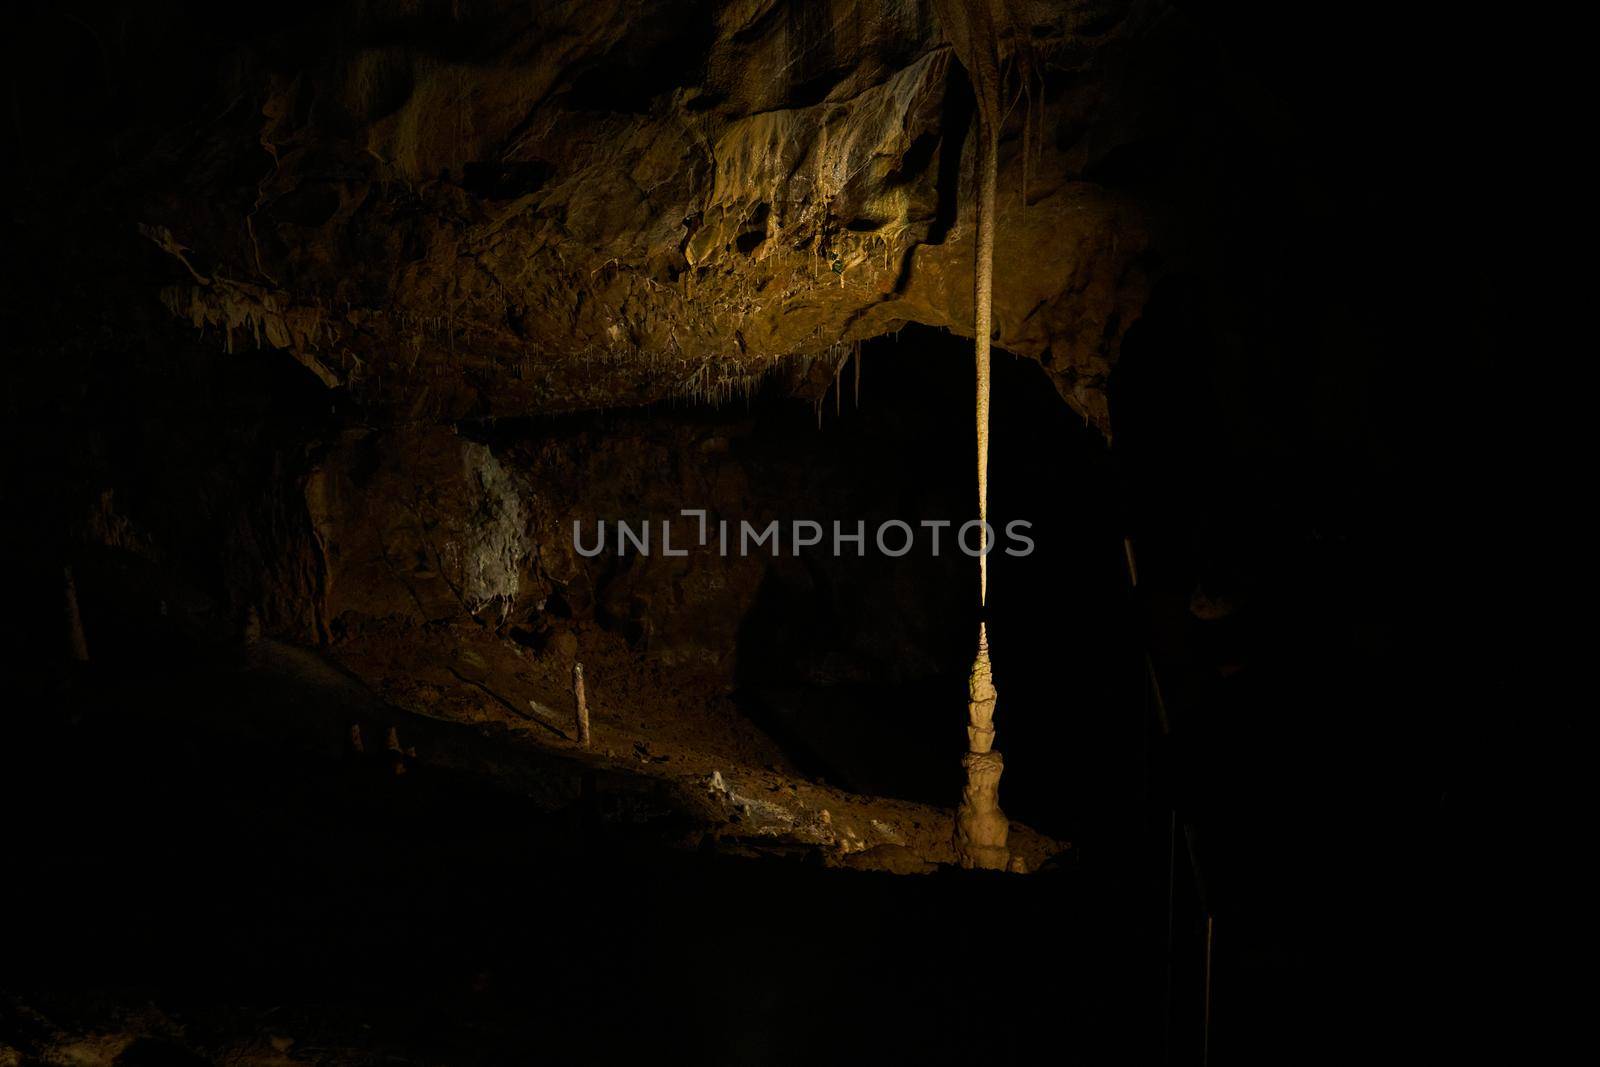 limestone formations inside Macocha caves in Moravian Karst by Jindrich_Blecha